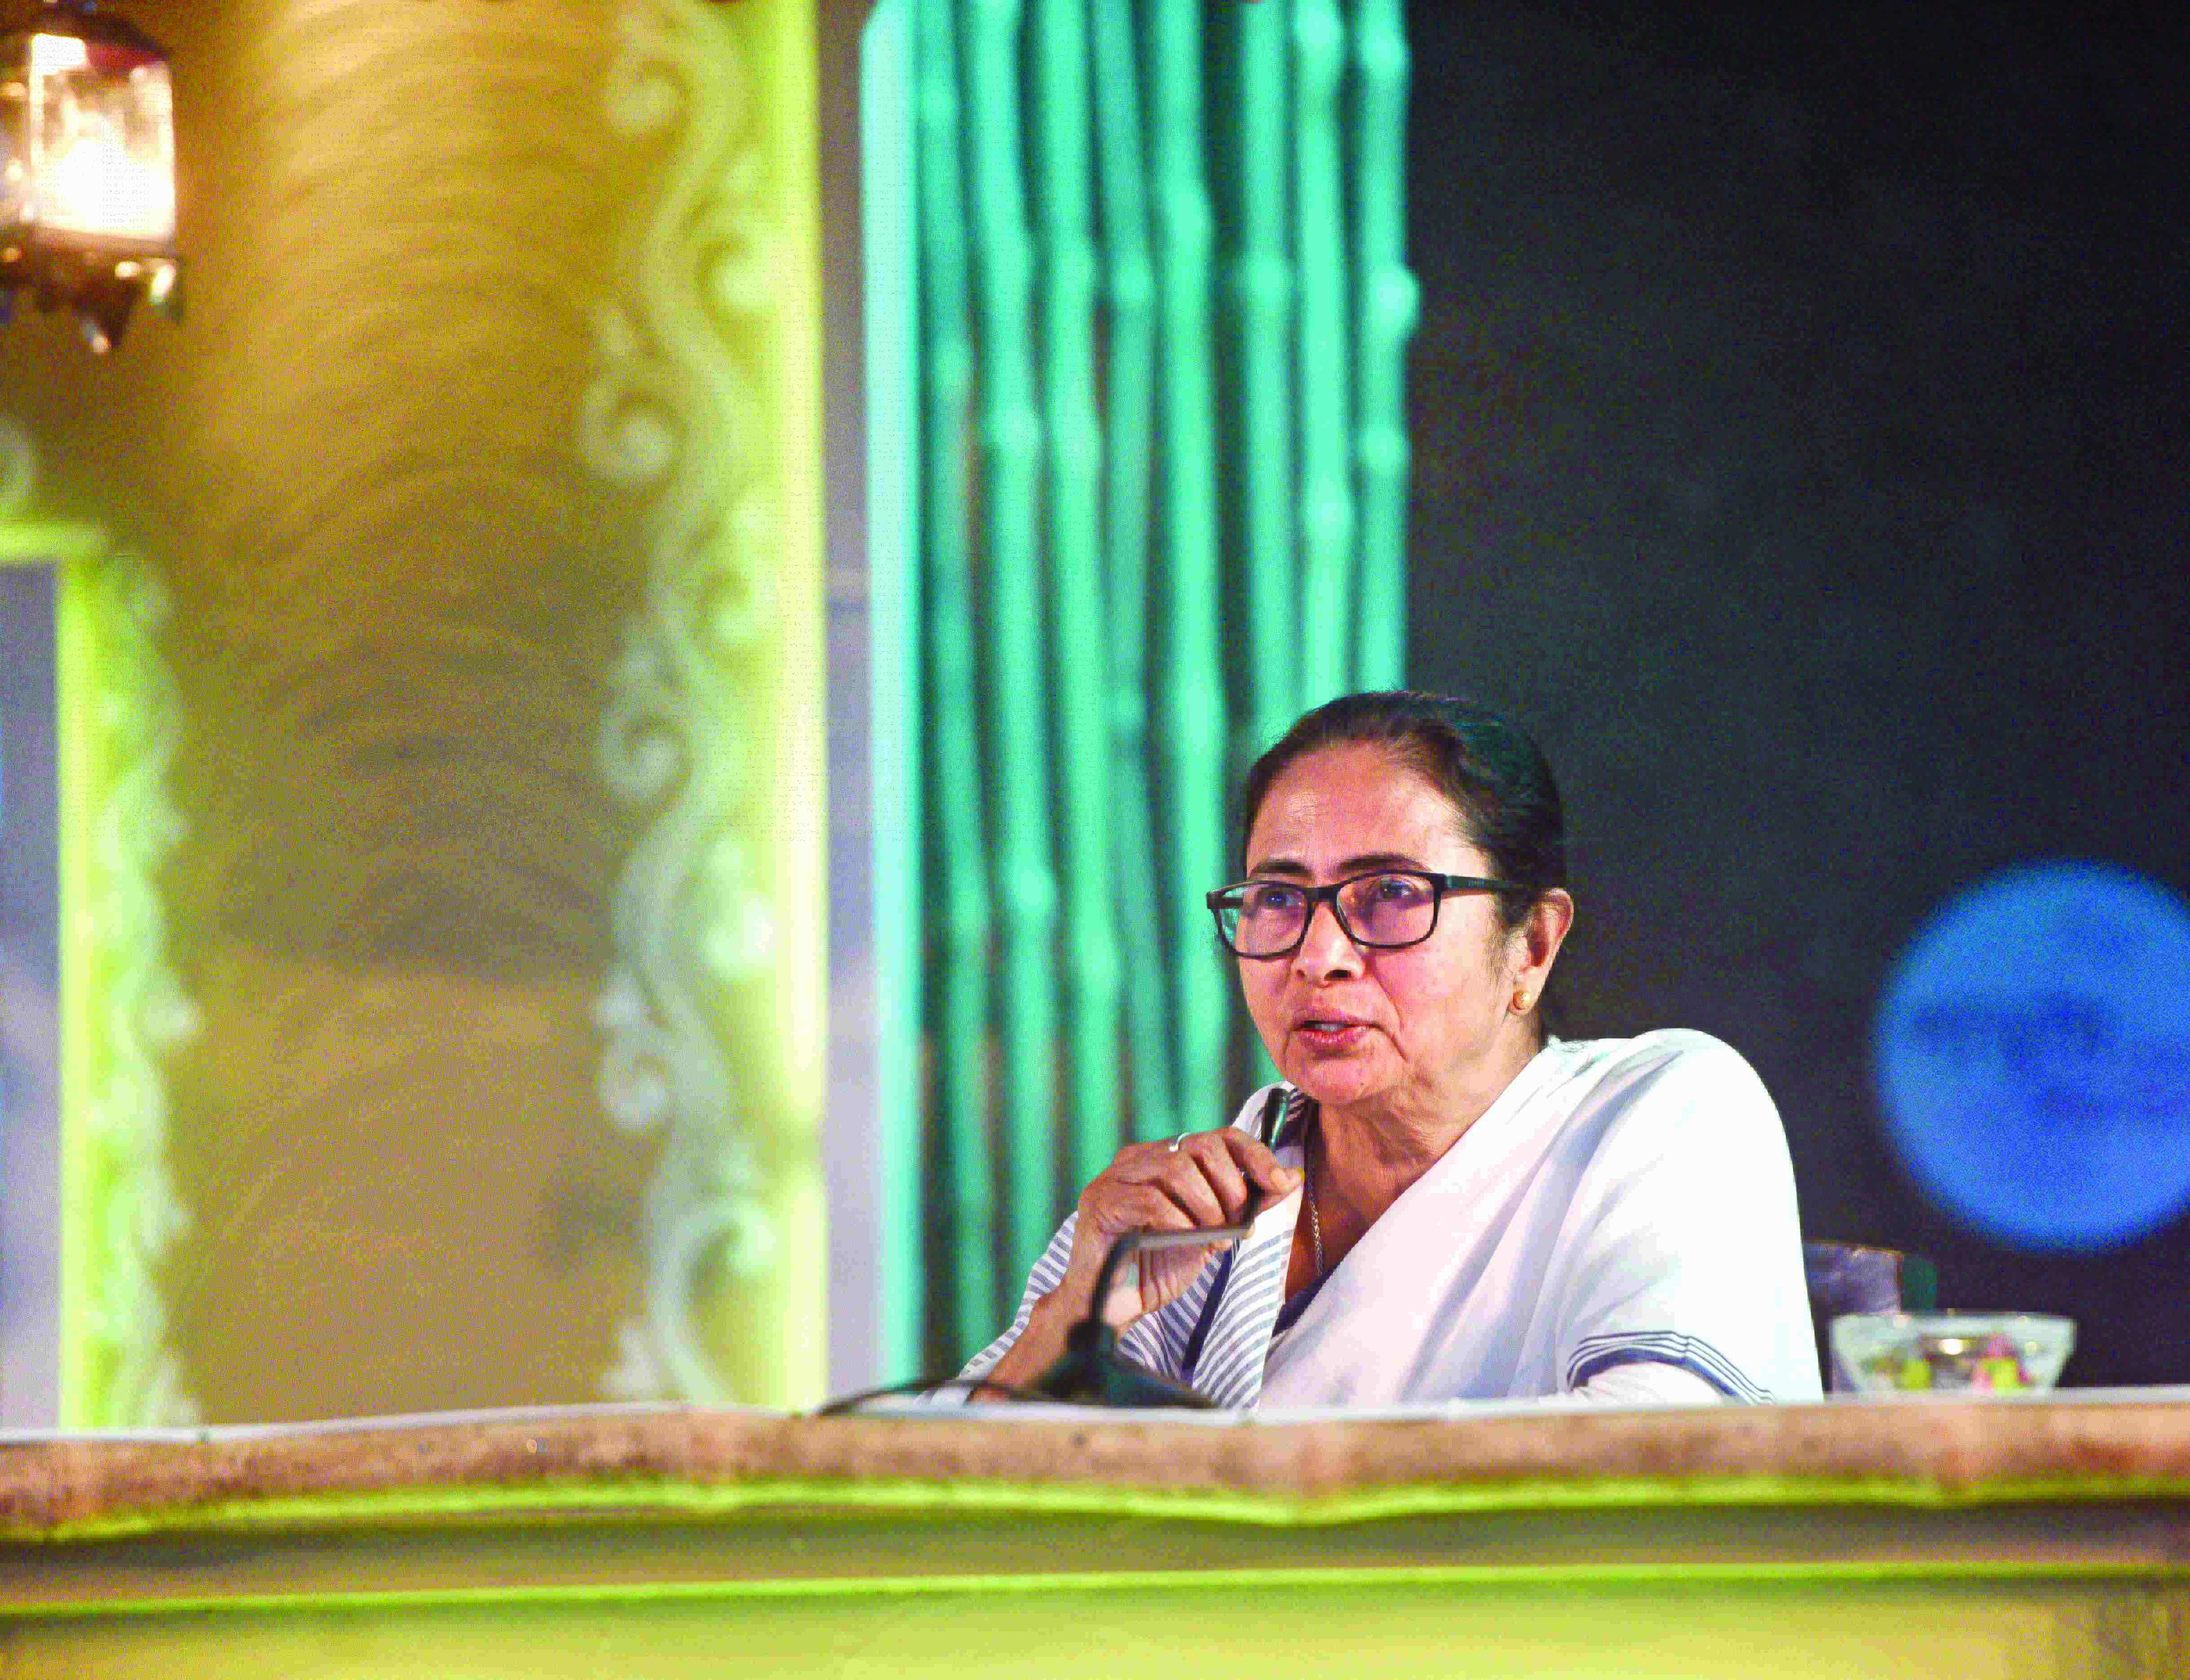 Mamata attends Amrit Mahotsav event headed by PM Modi